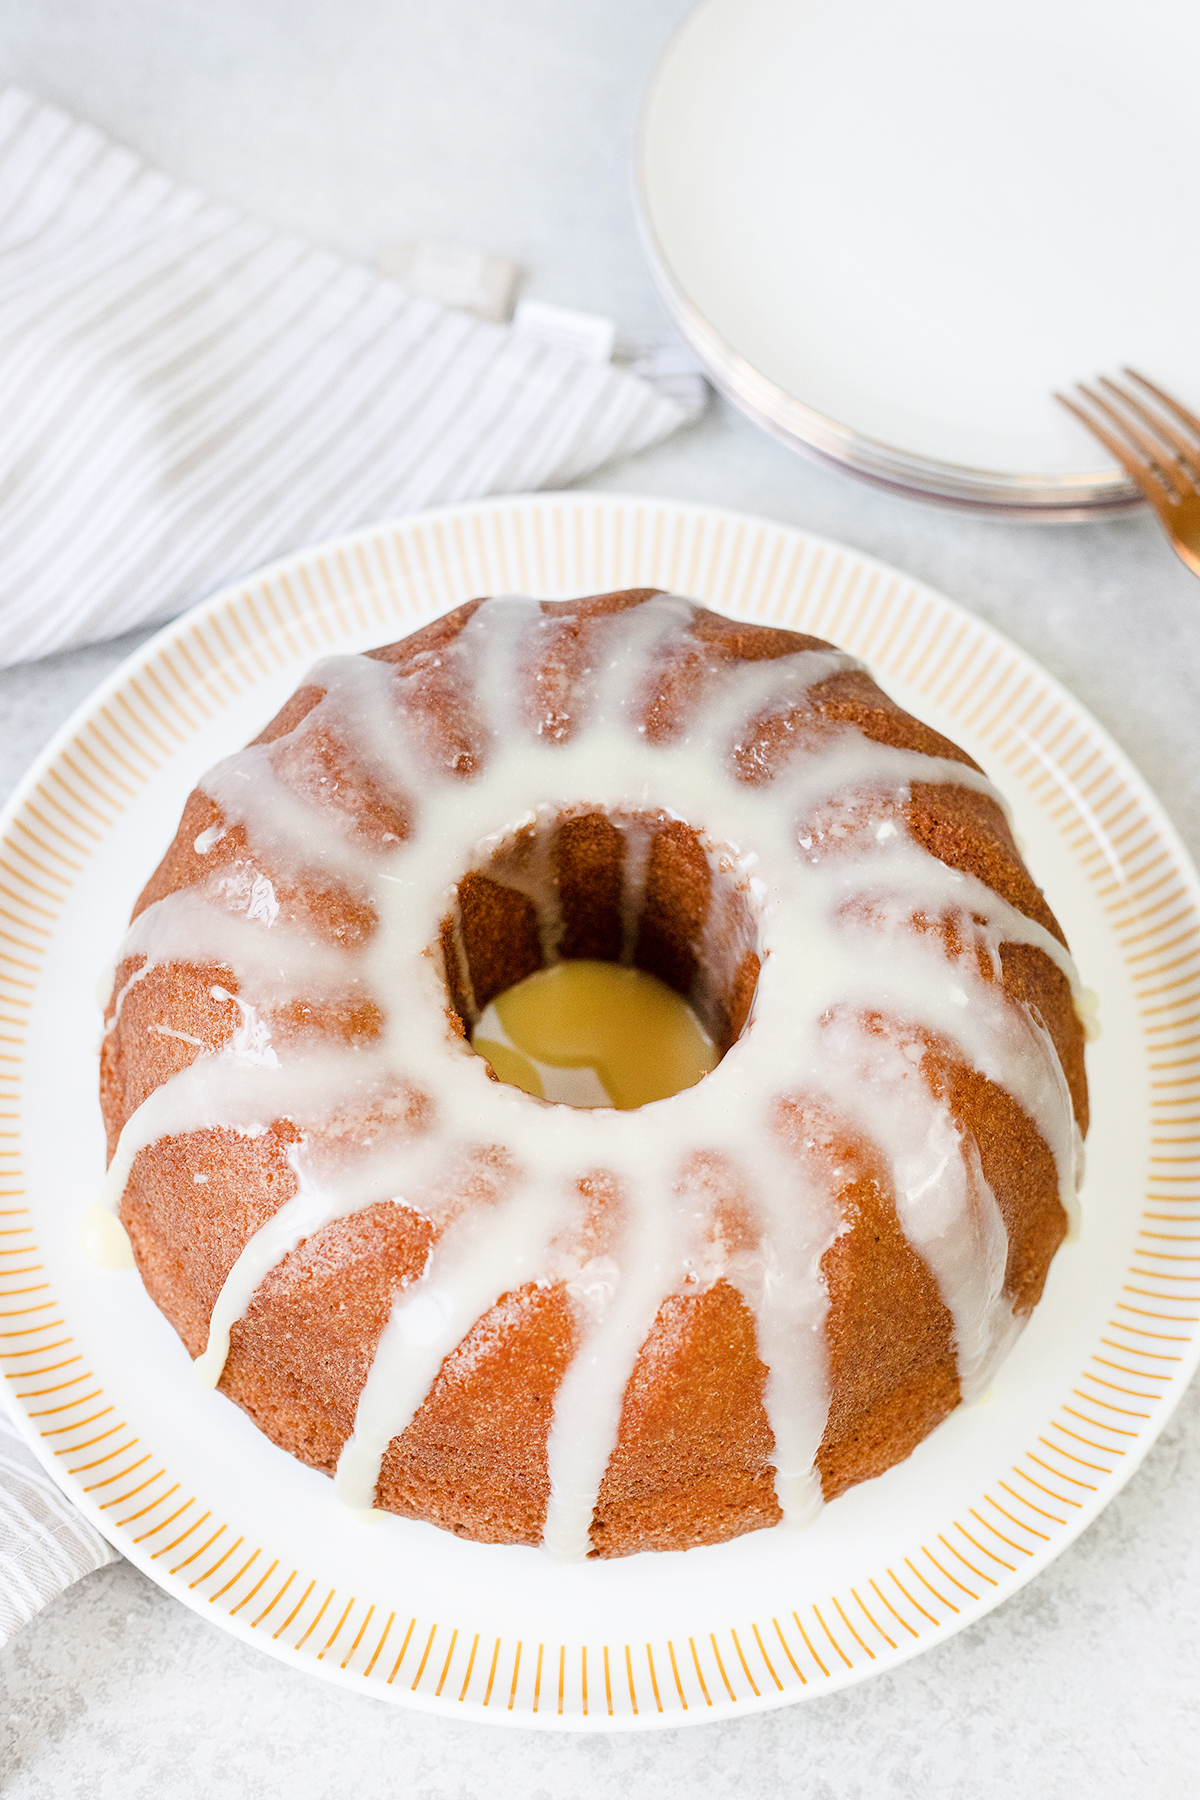 Today's dessert is an eggnog recipe, a super moist eggnog bundt cake. 